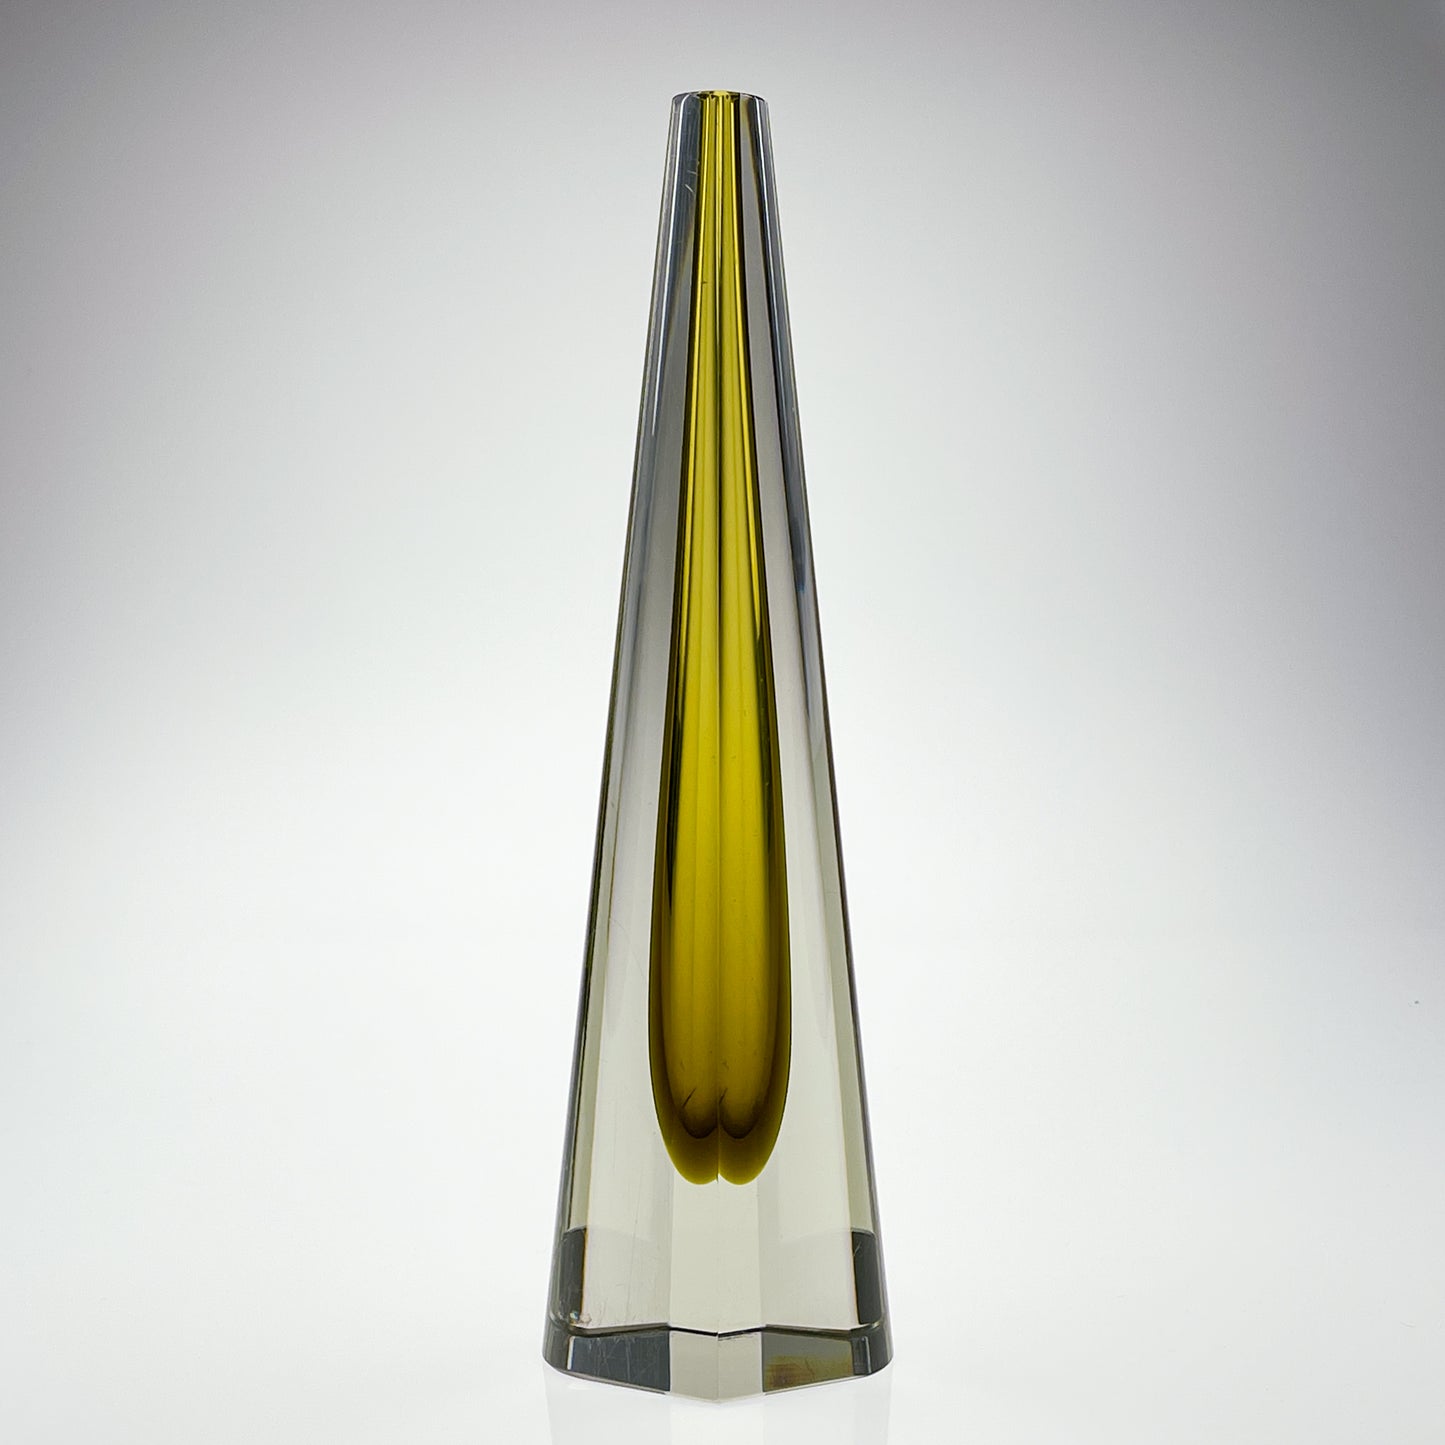 Kaj Franck glass art-object "Obeliski", model KF 246 by Nuutajärvi-Notsjö